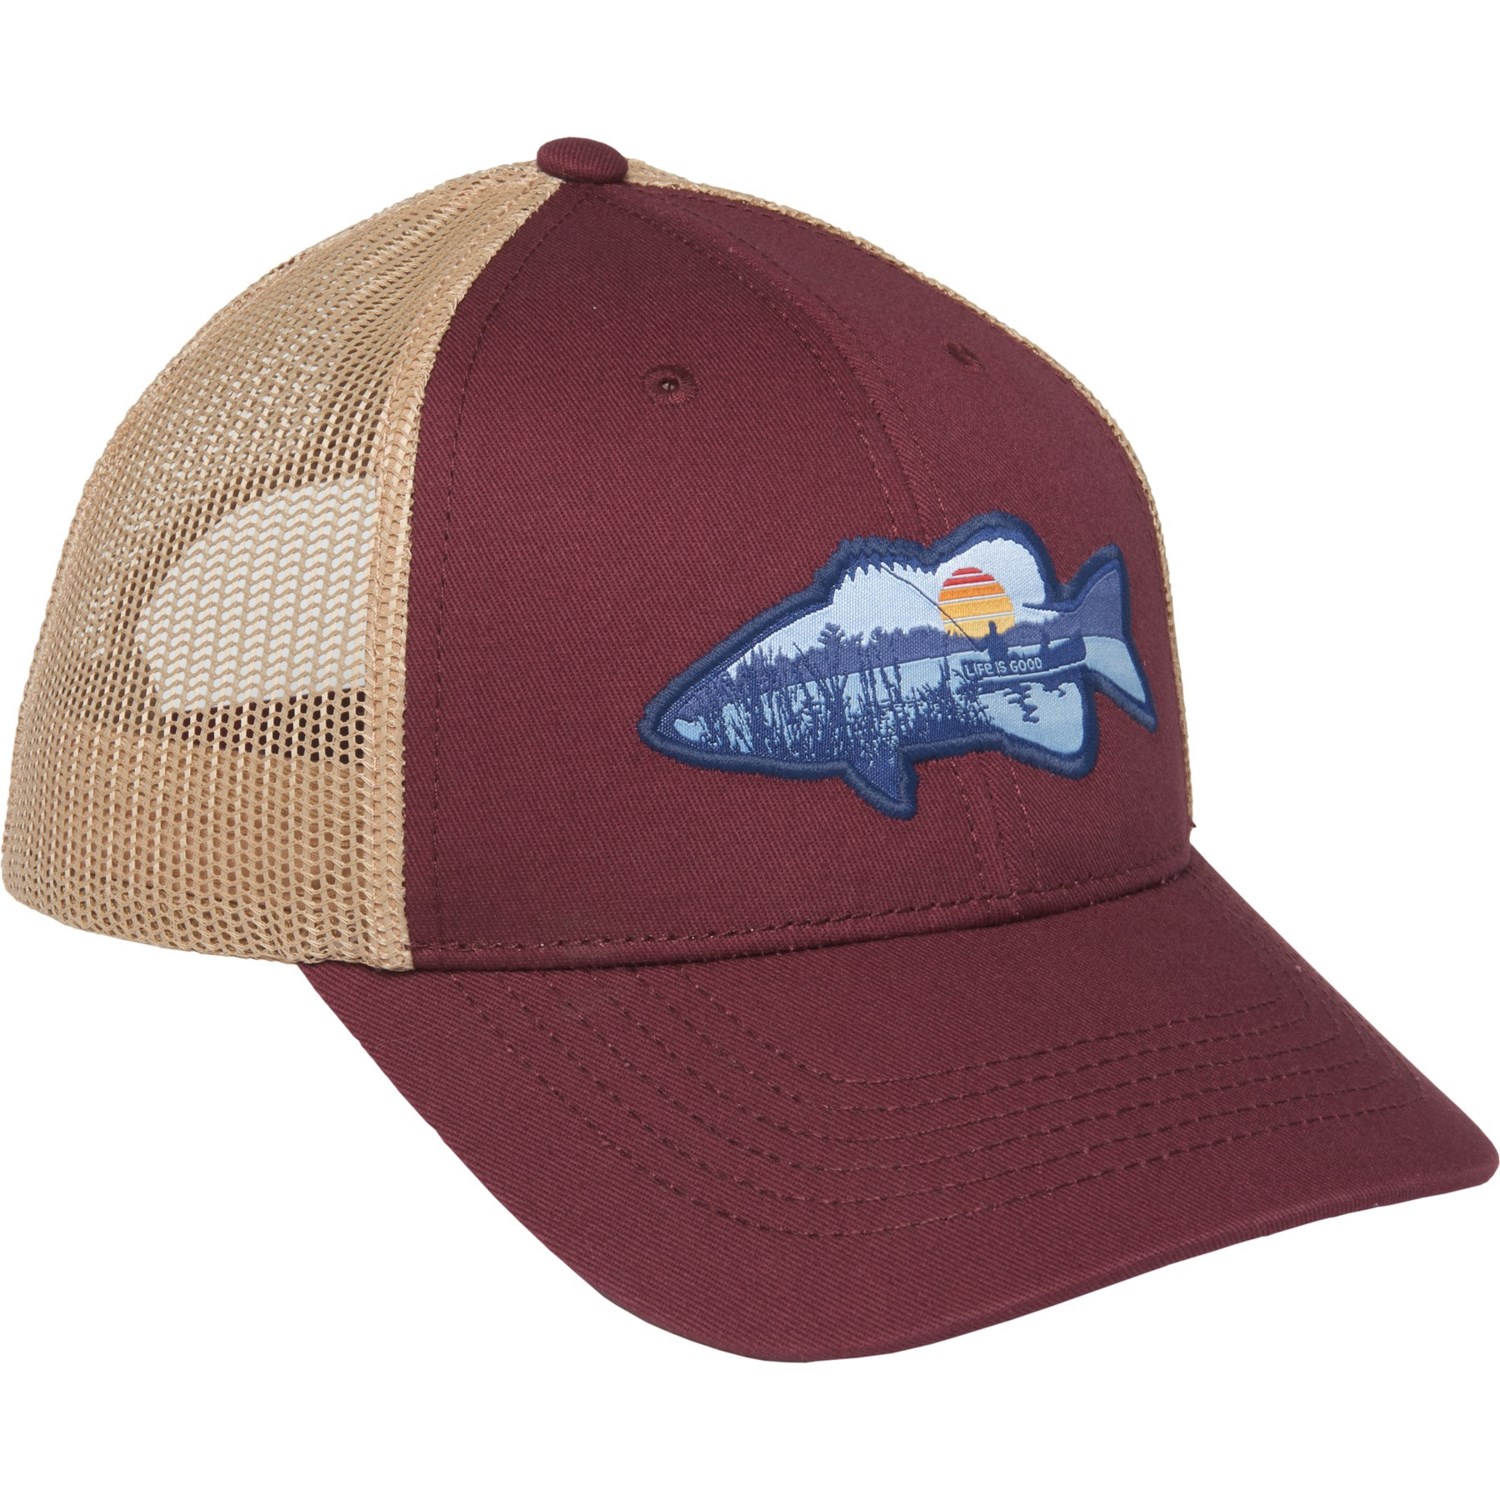 Bass Life Member Embroidered Fishing Baseball Hat Cap Adjustable